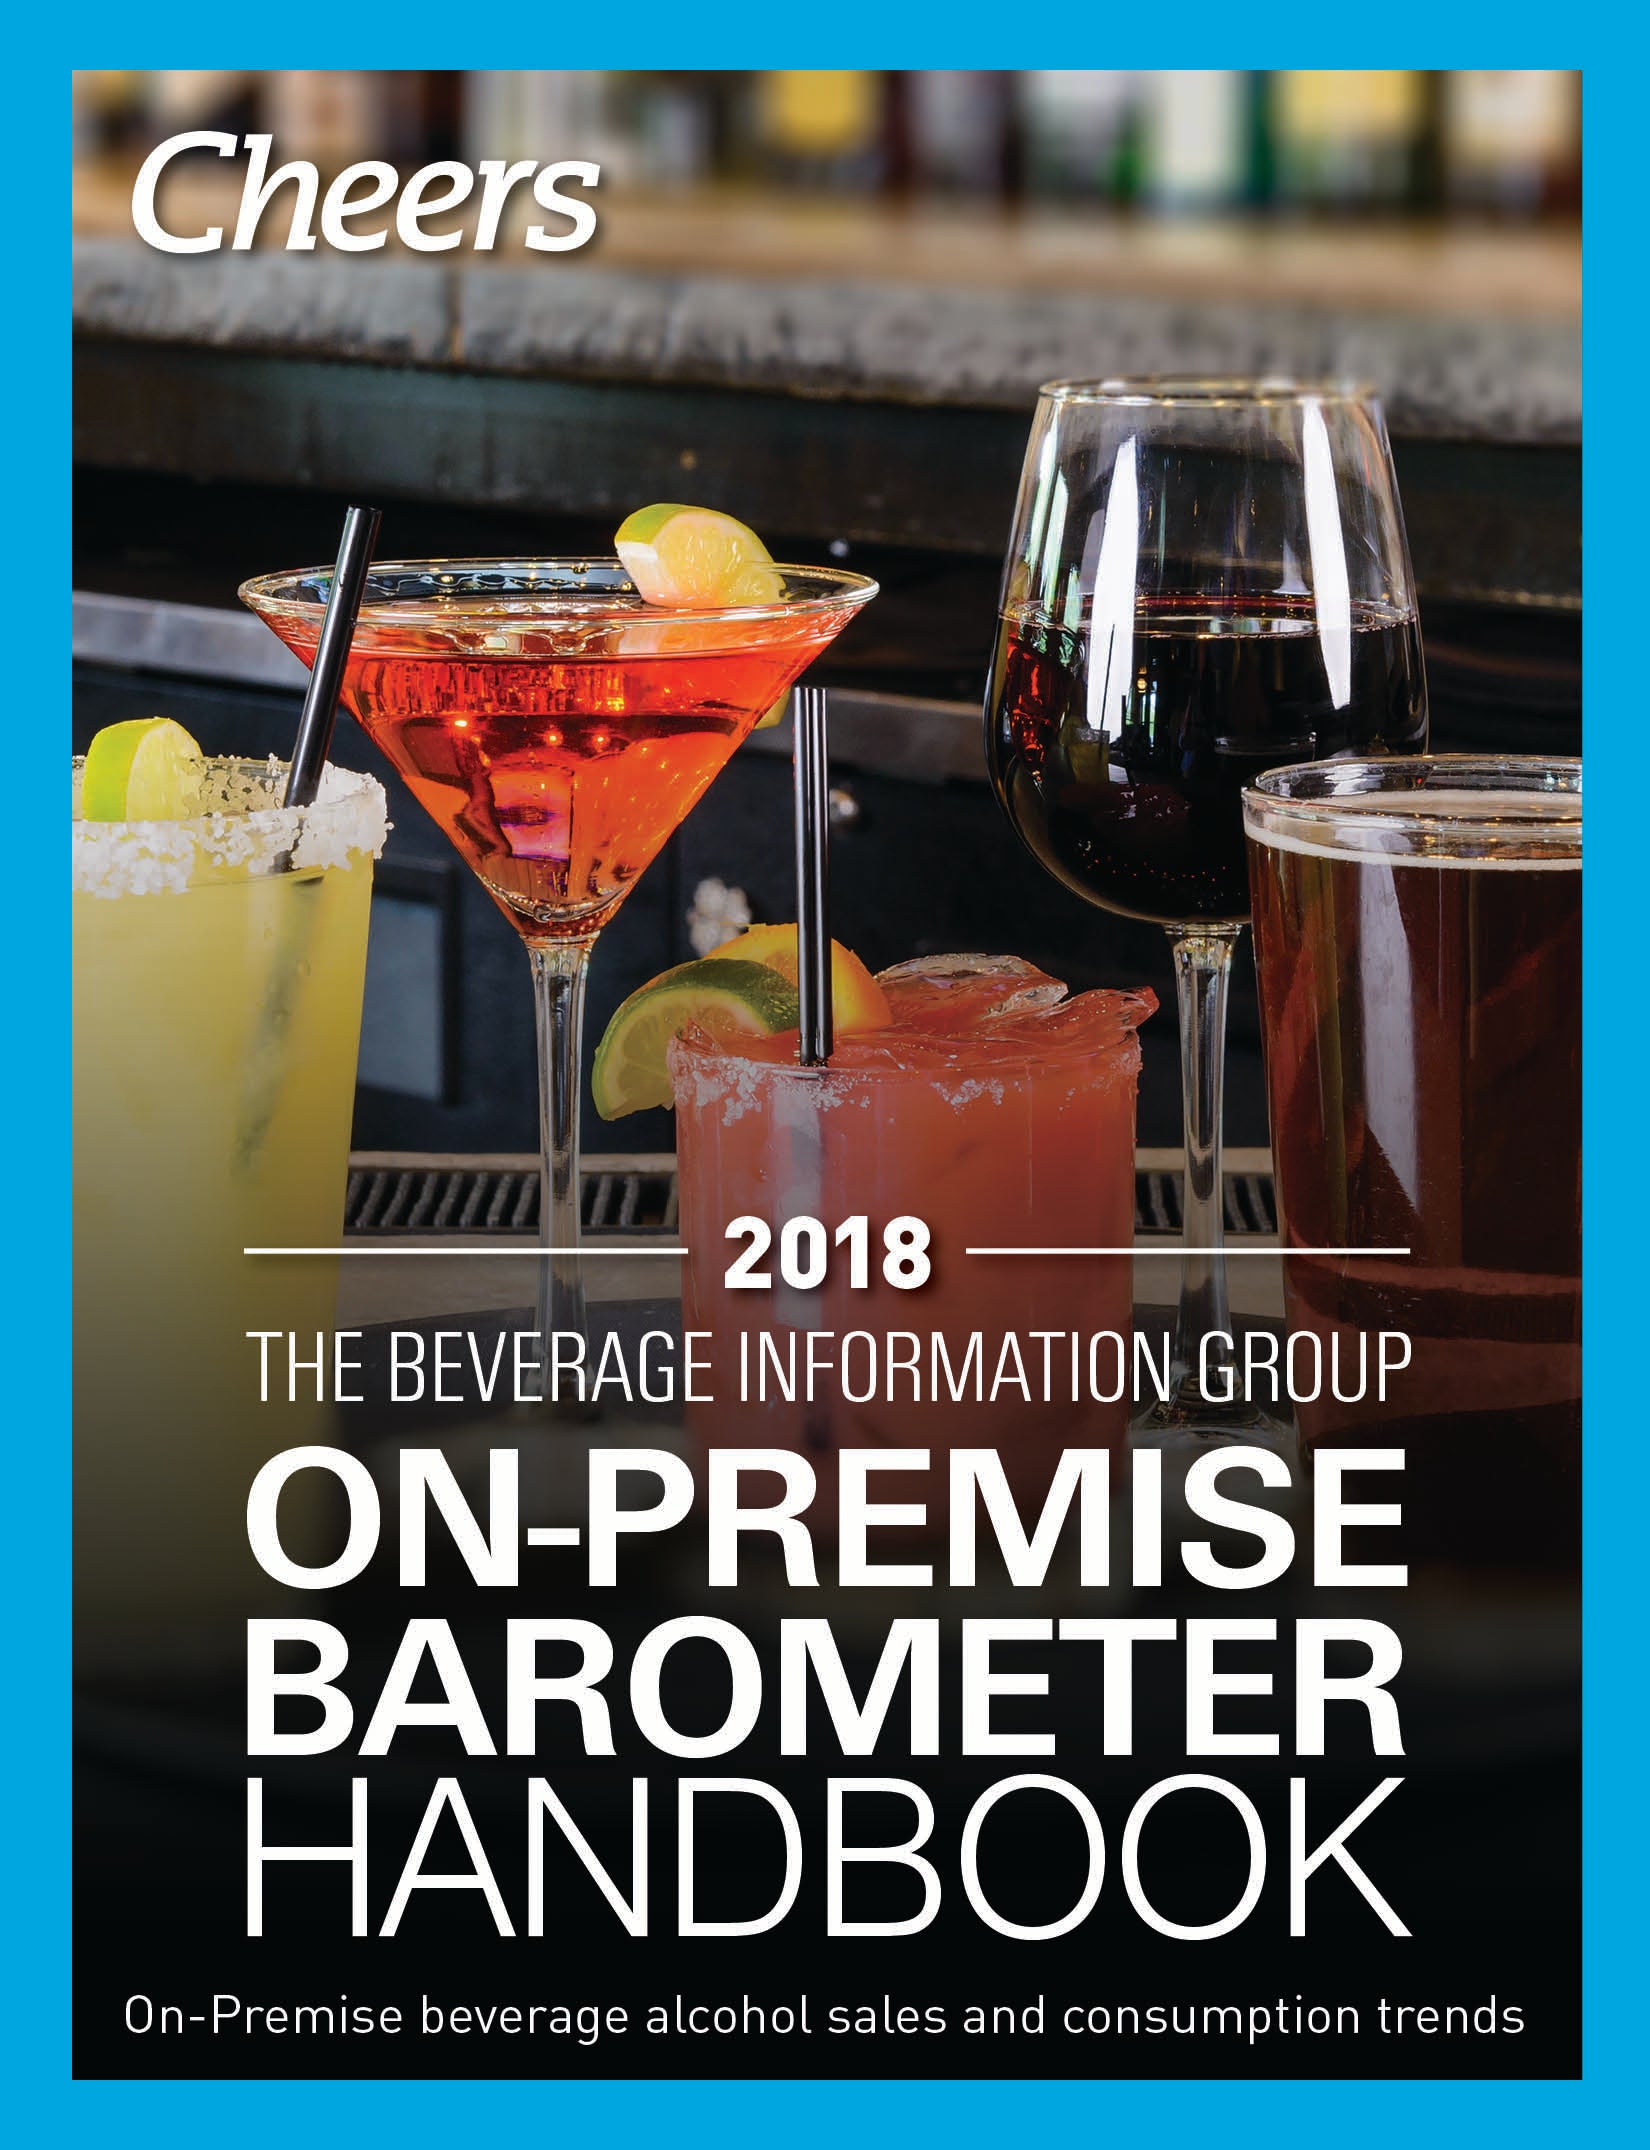 2018 Cheers On-Premise BARometer Handbook  - On Sale 60% Off 2018 Published Price